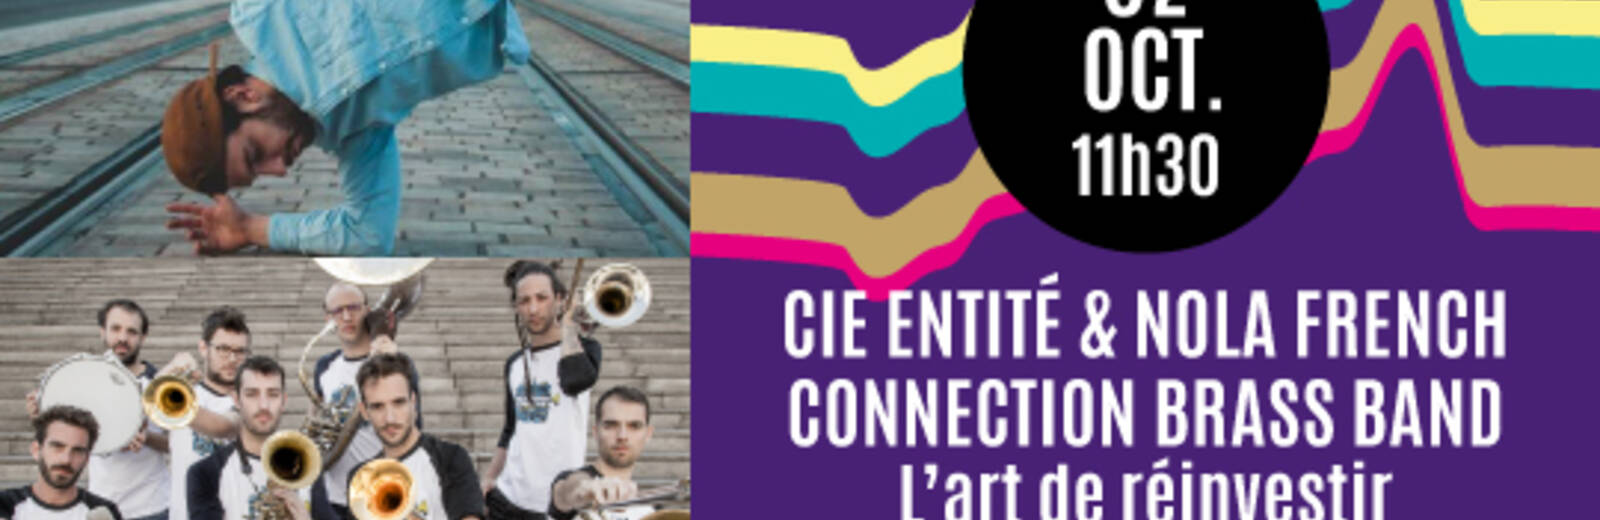 Cie Entité & Nola French Connection Brass Band